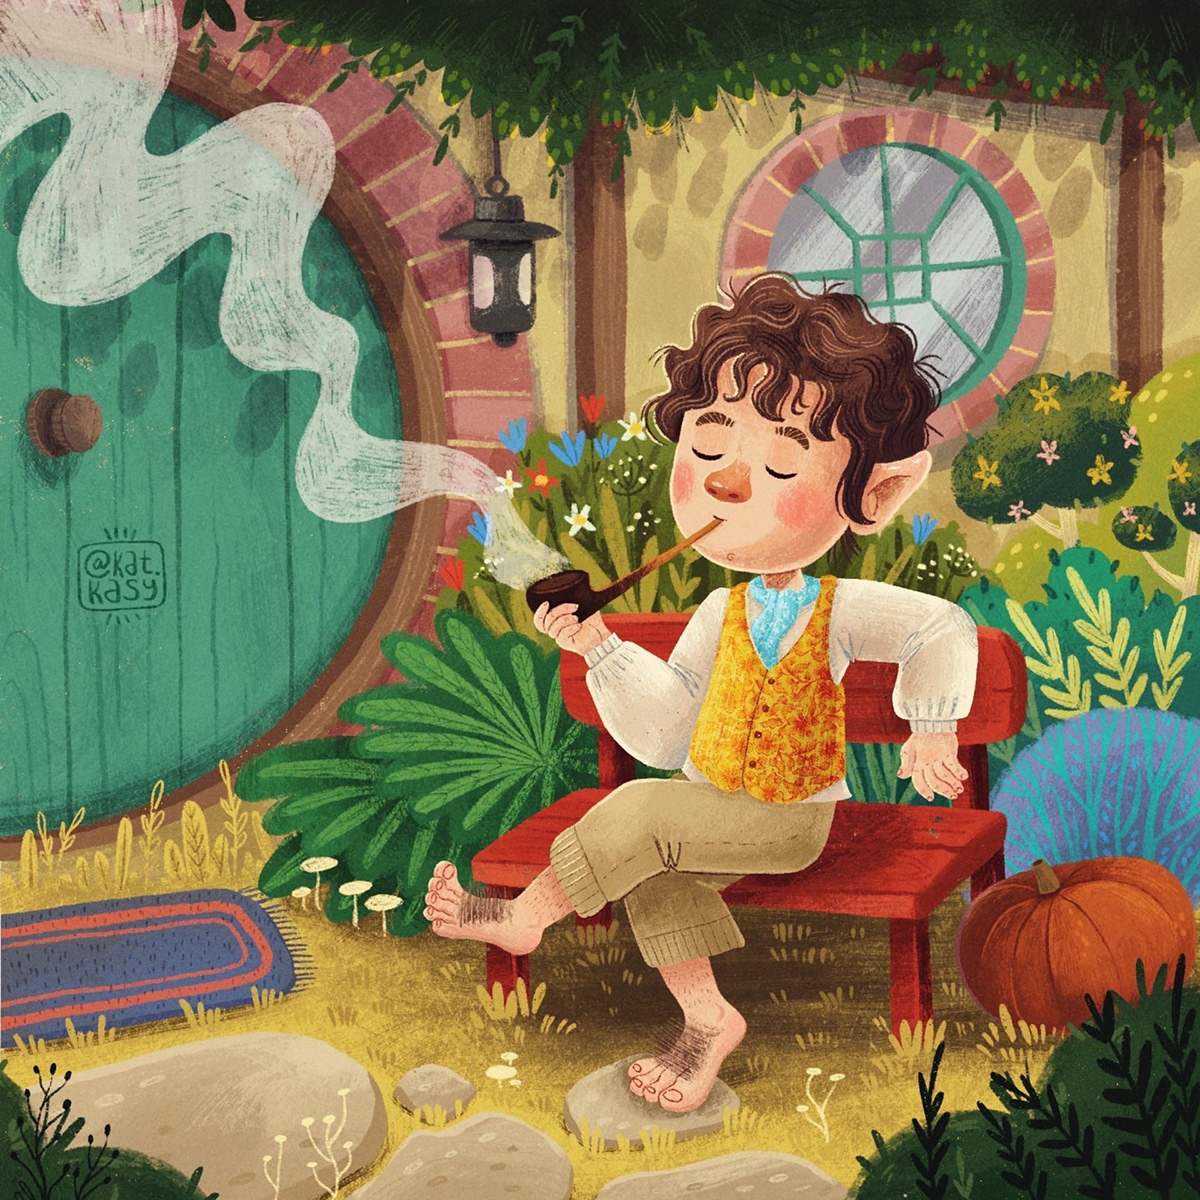 Character design  book illustration Digital Art  fanart ILLUSTRATION  kids illustration hobbit Bilbo Baggins bilbo